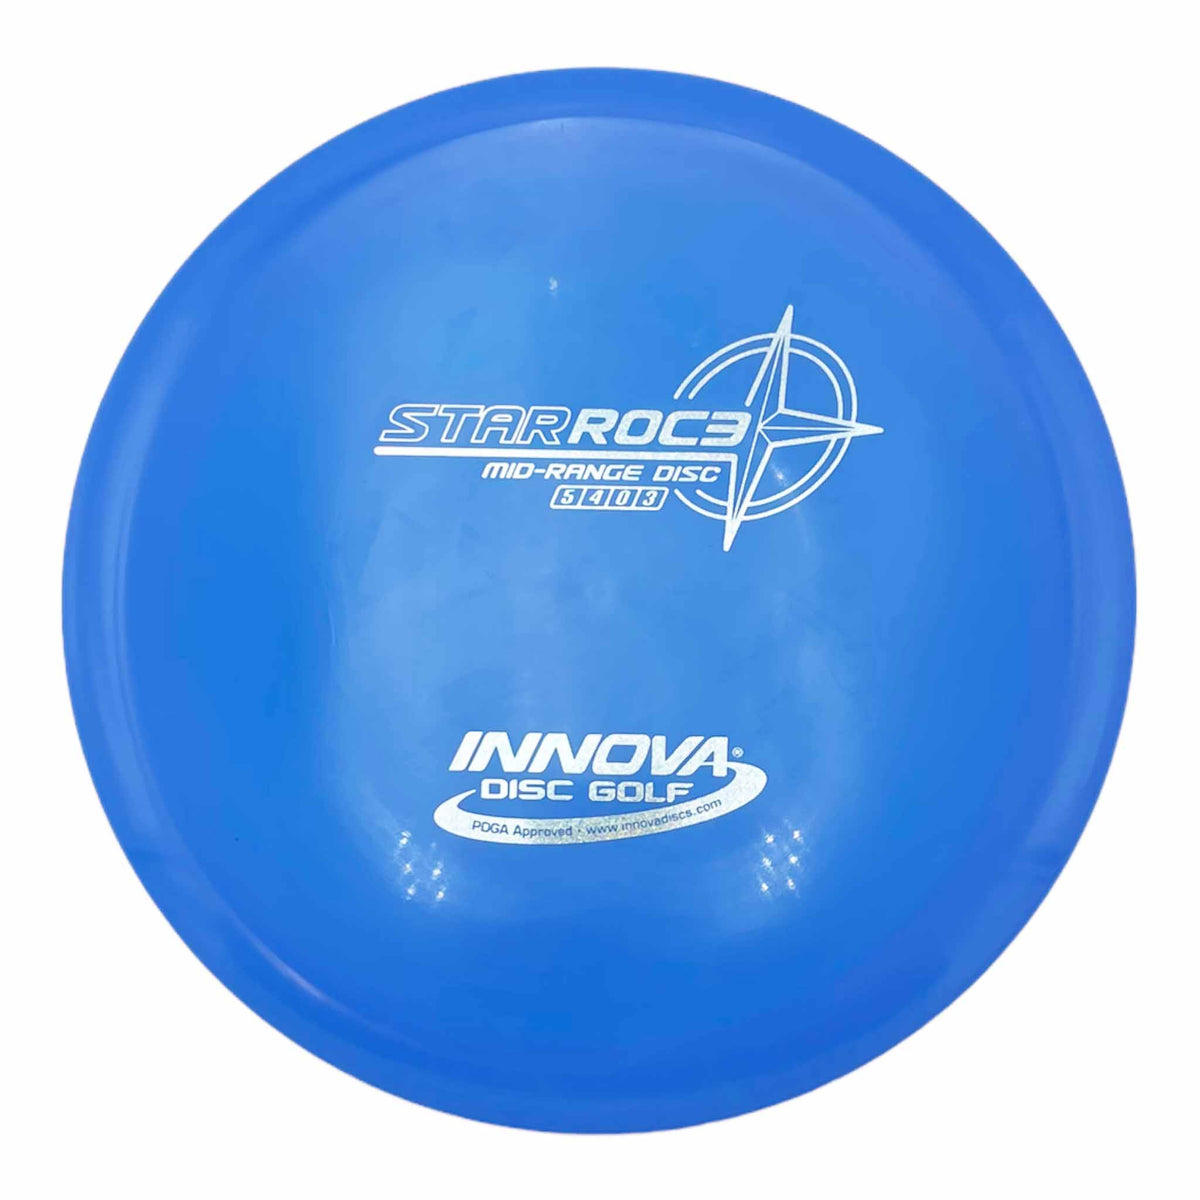 Innova Disc Golf Star Roc3 midrange - Blue